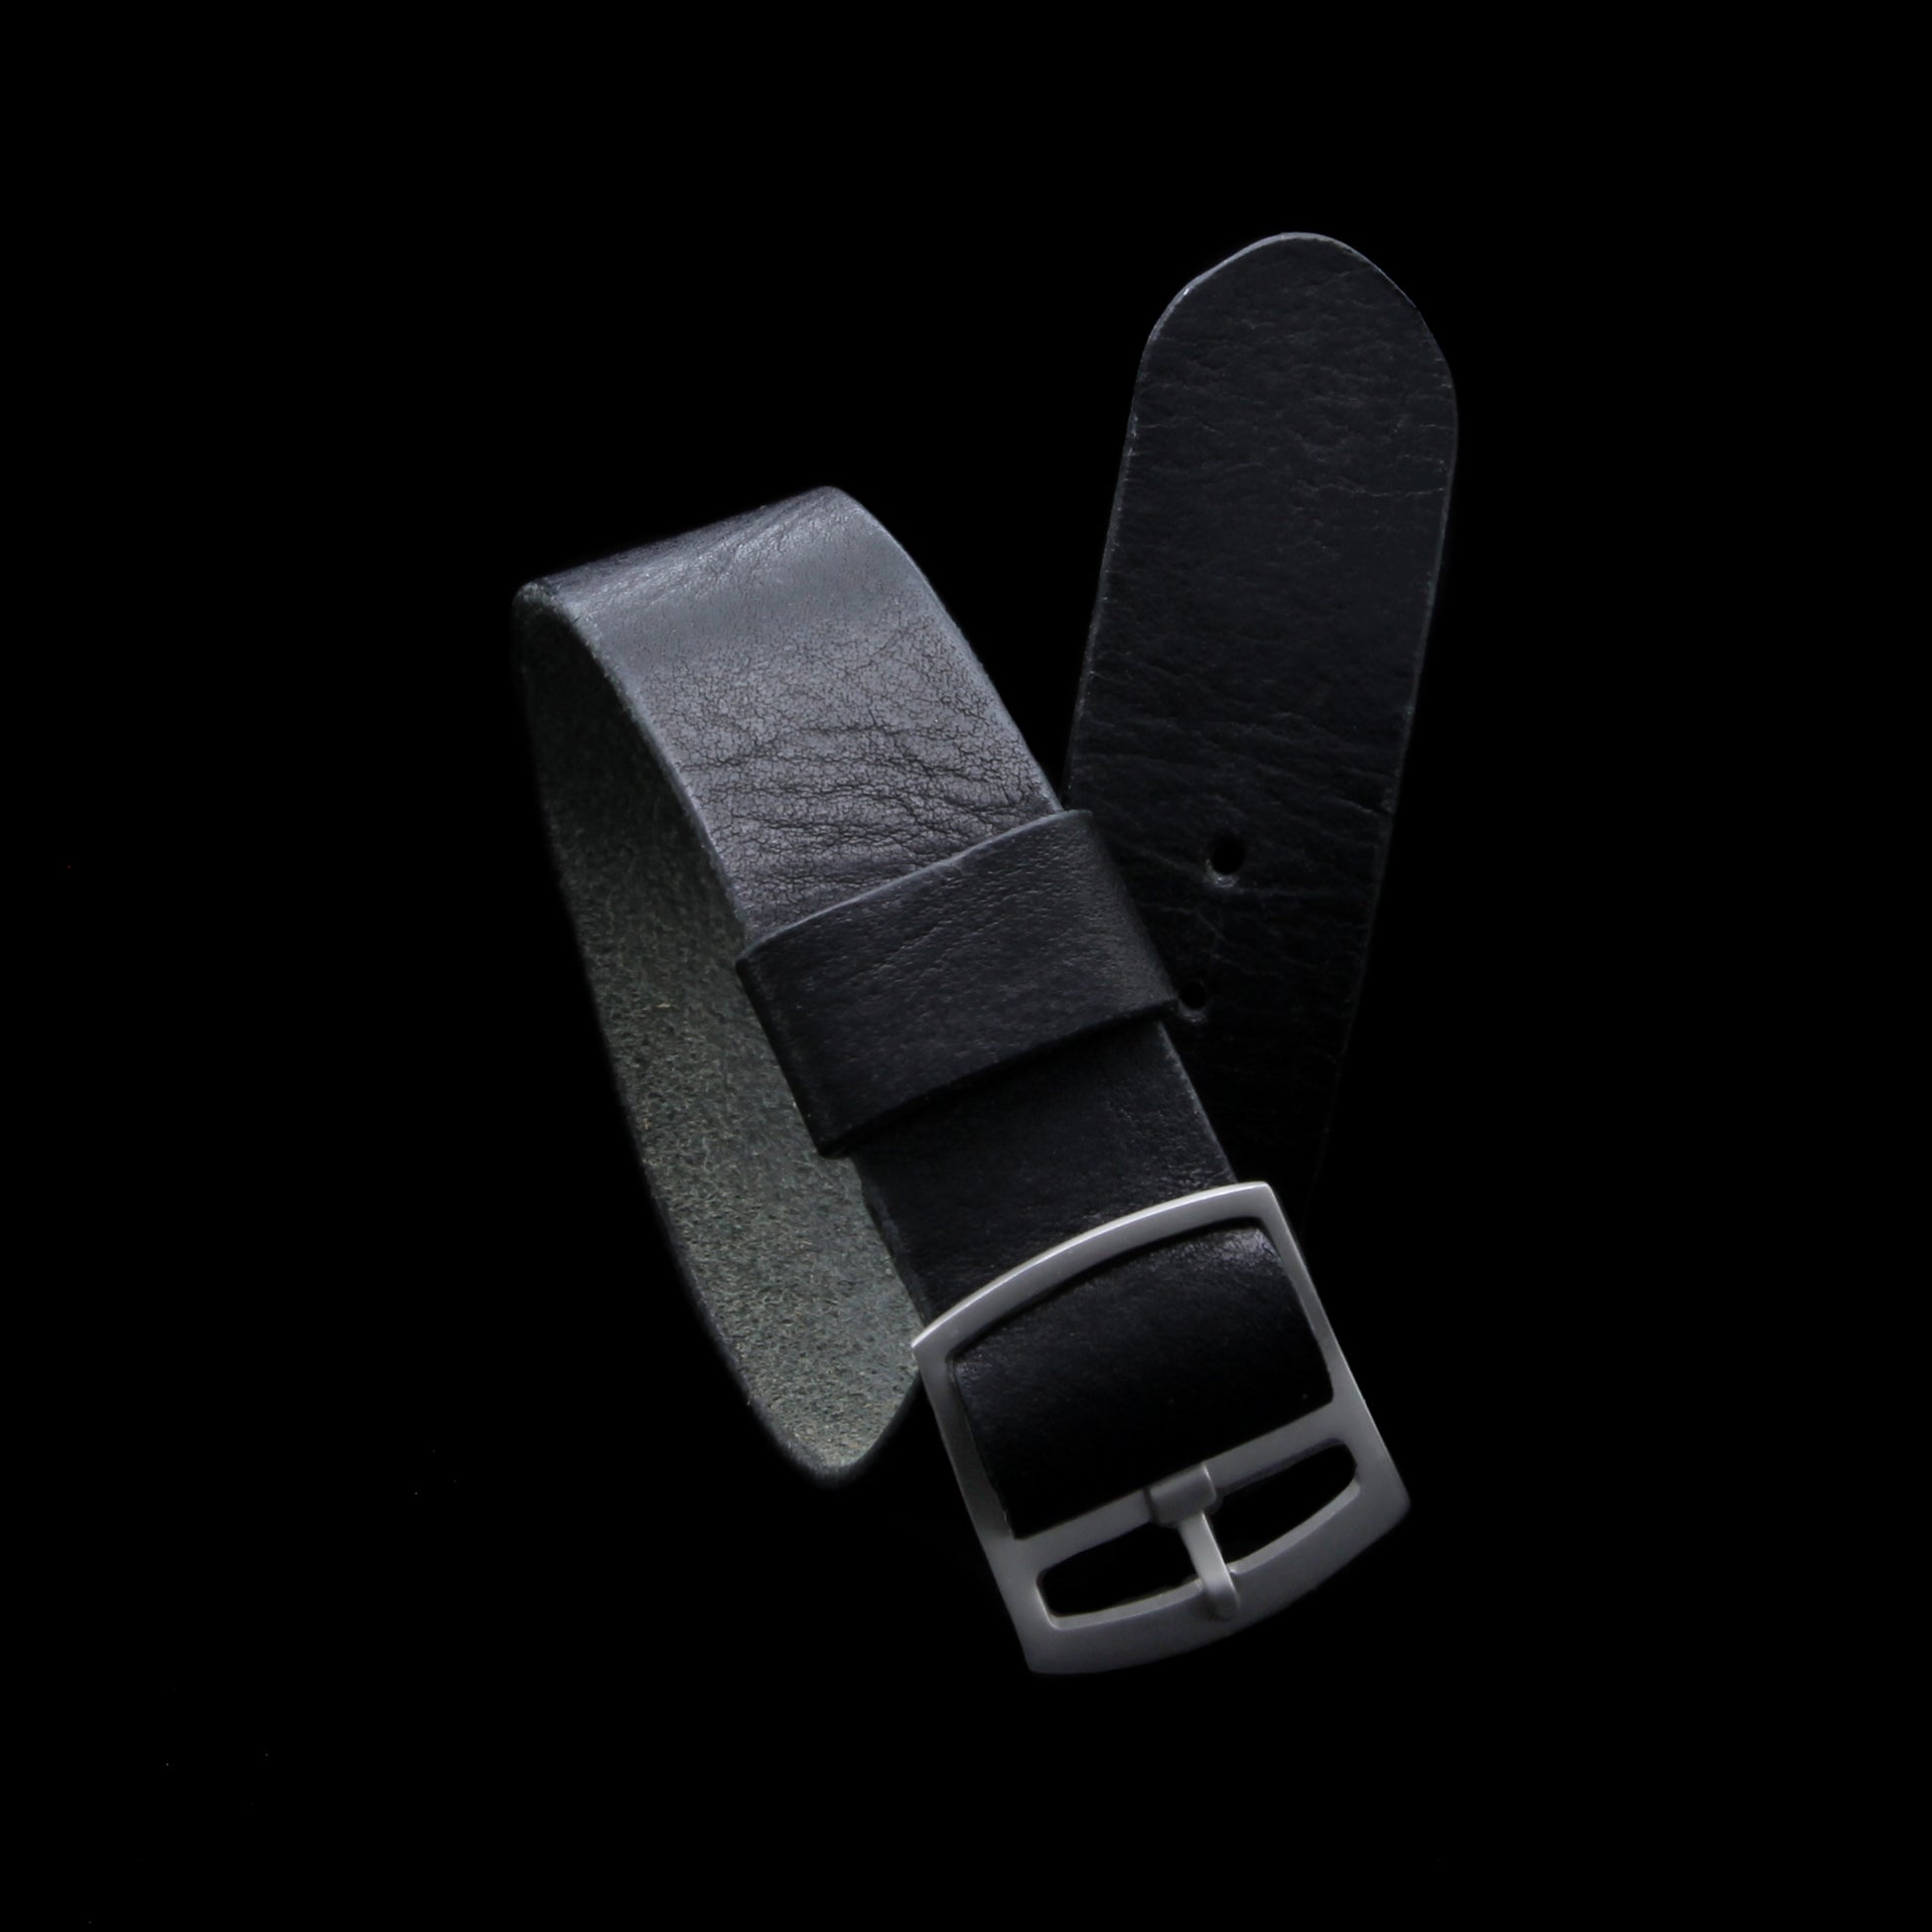 Vintage Nero (Black) Leather One Piece Watch Strap | Adjustable | Cozy Handmade